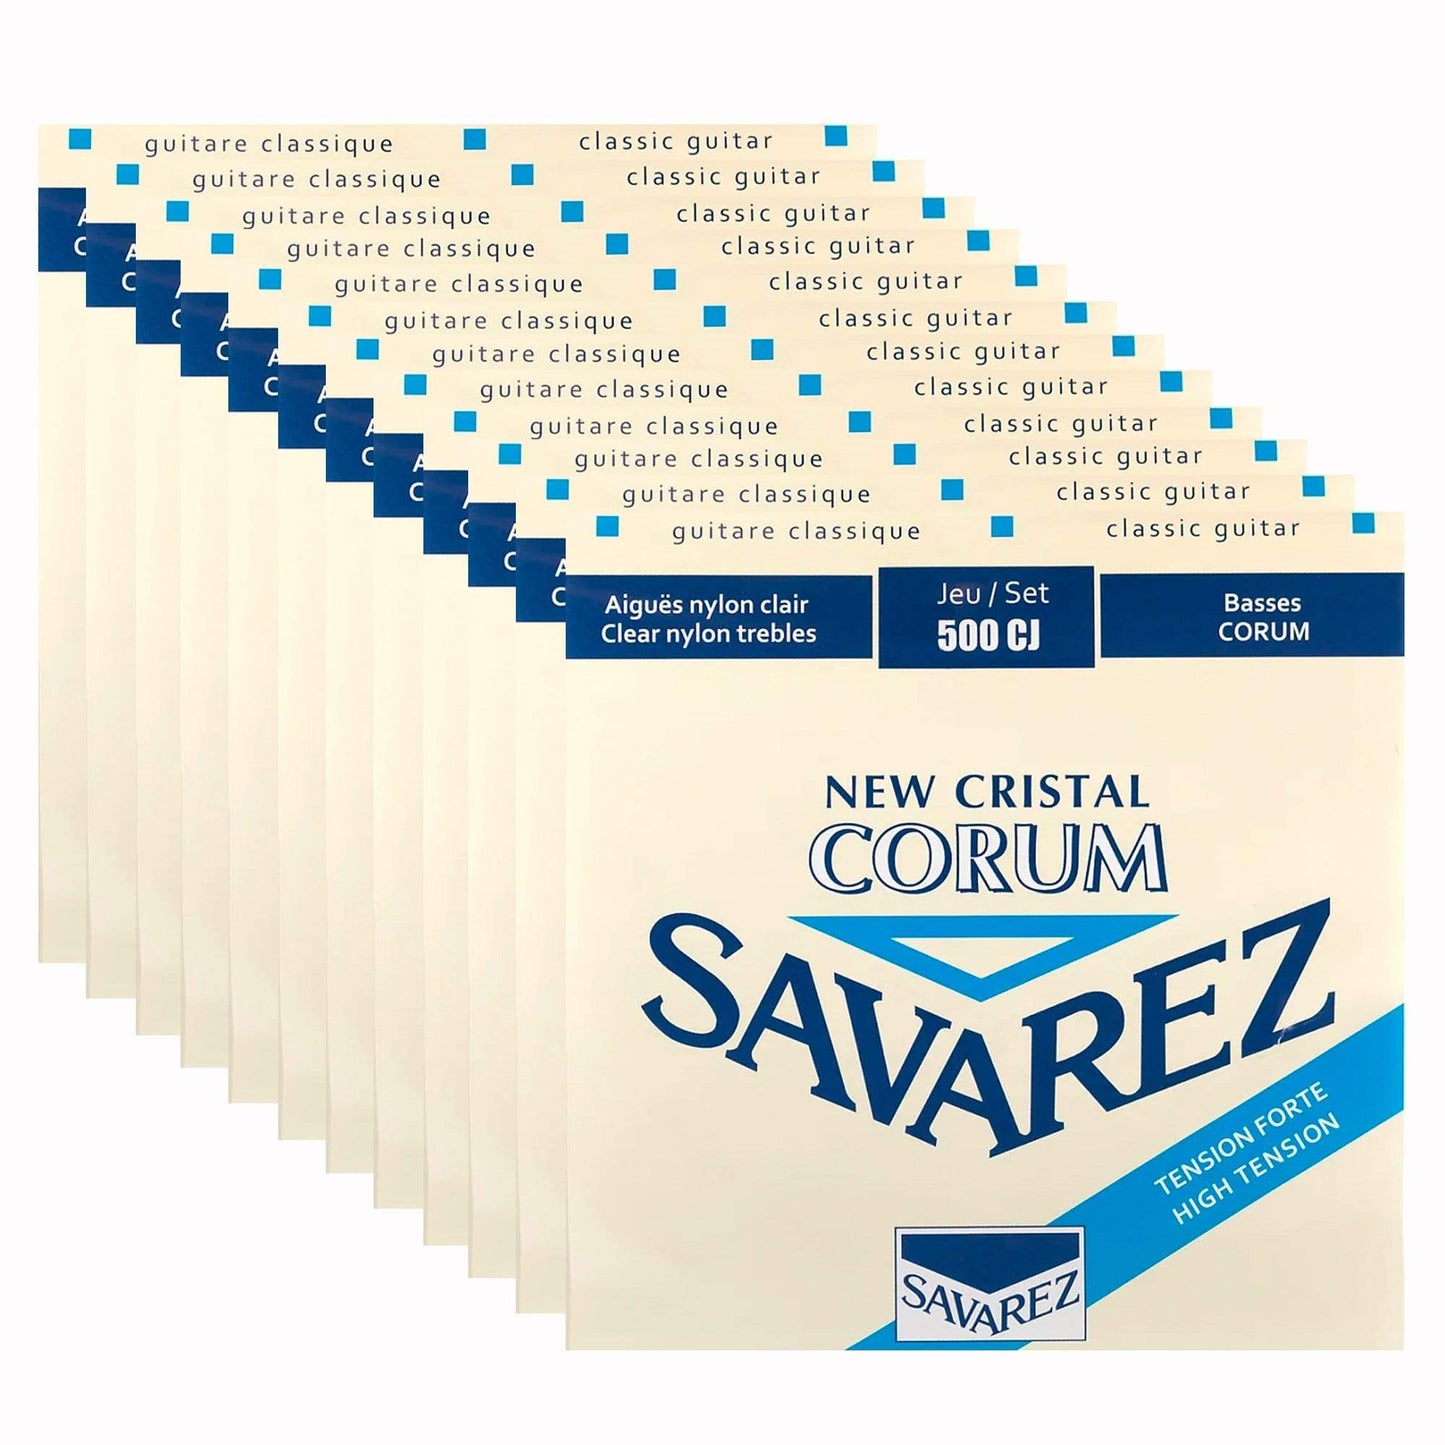 Savarez 500CJ Cristal Corum High Tension Trebles Normal Tension Basses 12 Pack Bundle Accessories / Strings / Guitar Strings